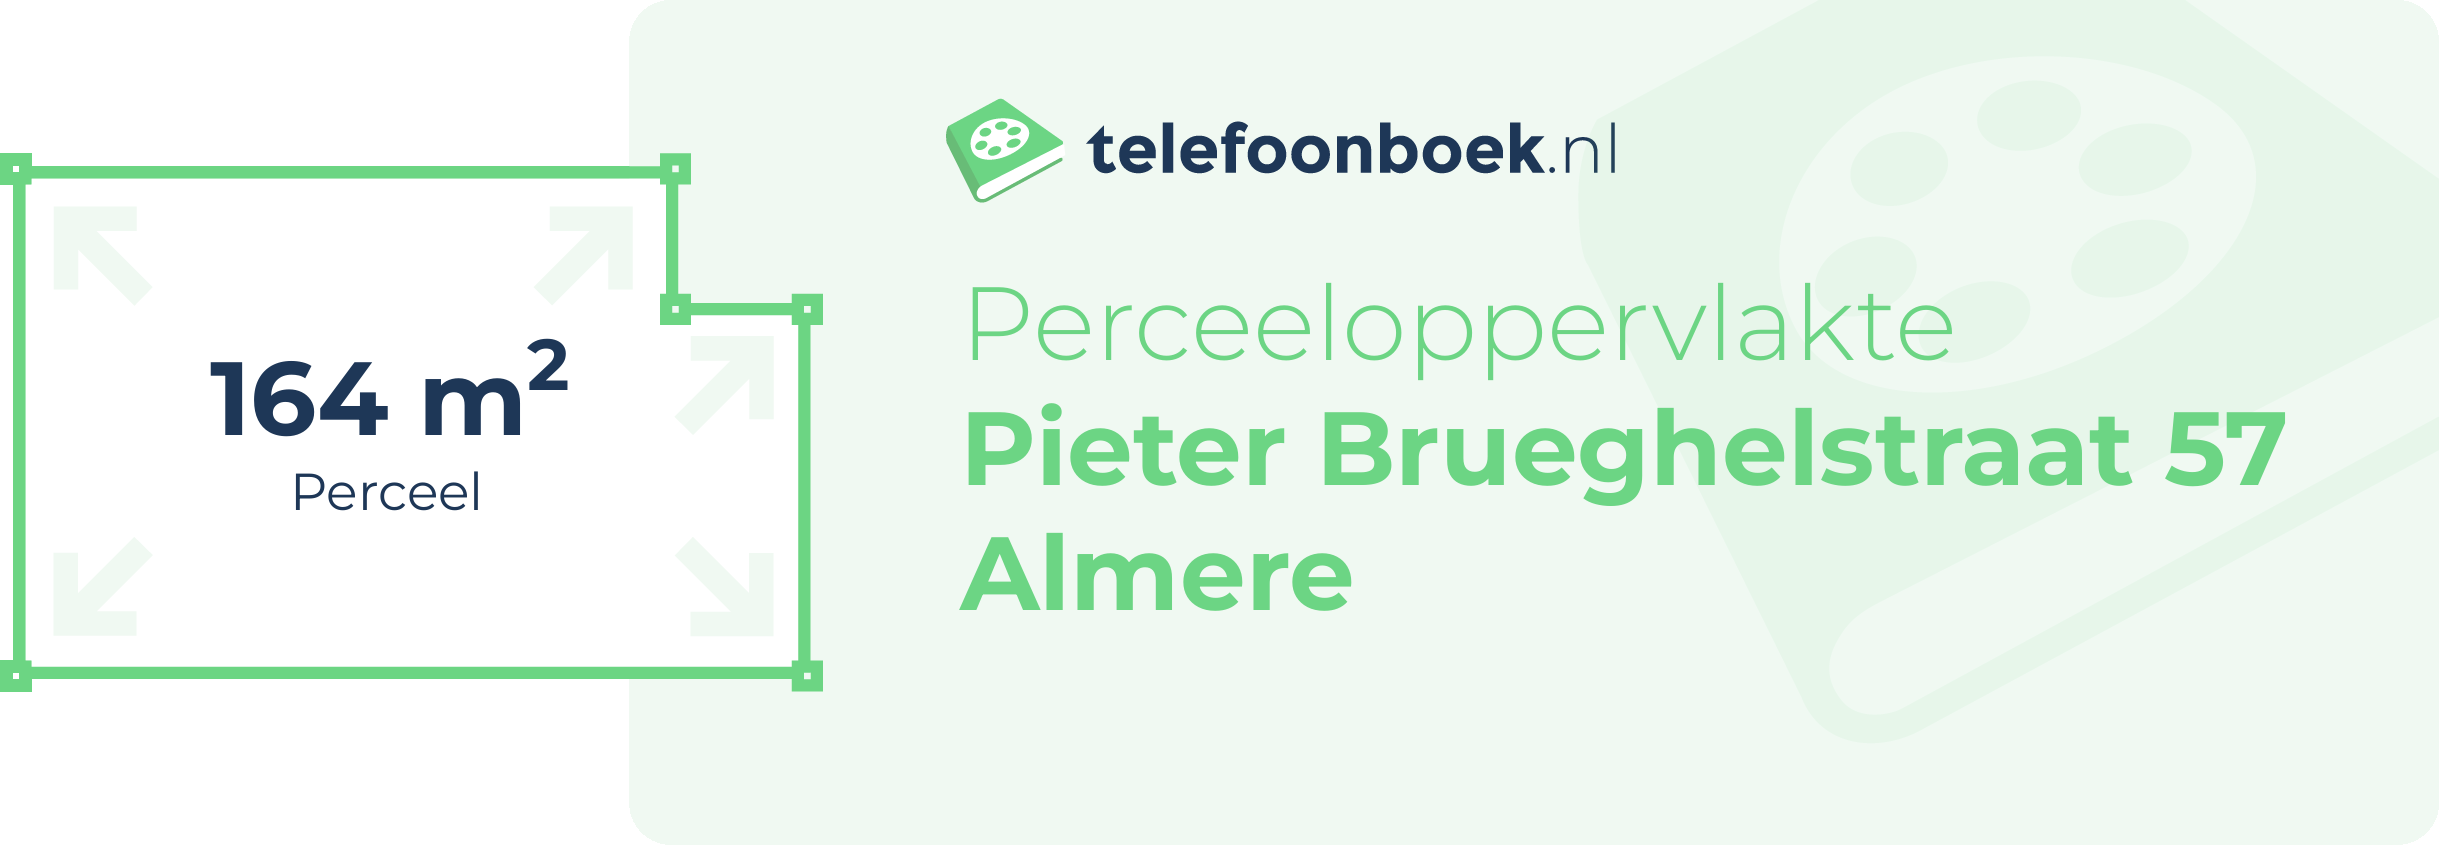 Perceeloppervlakte Pieter Brueghelstraat 57 Almere